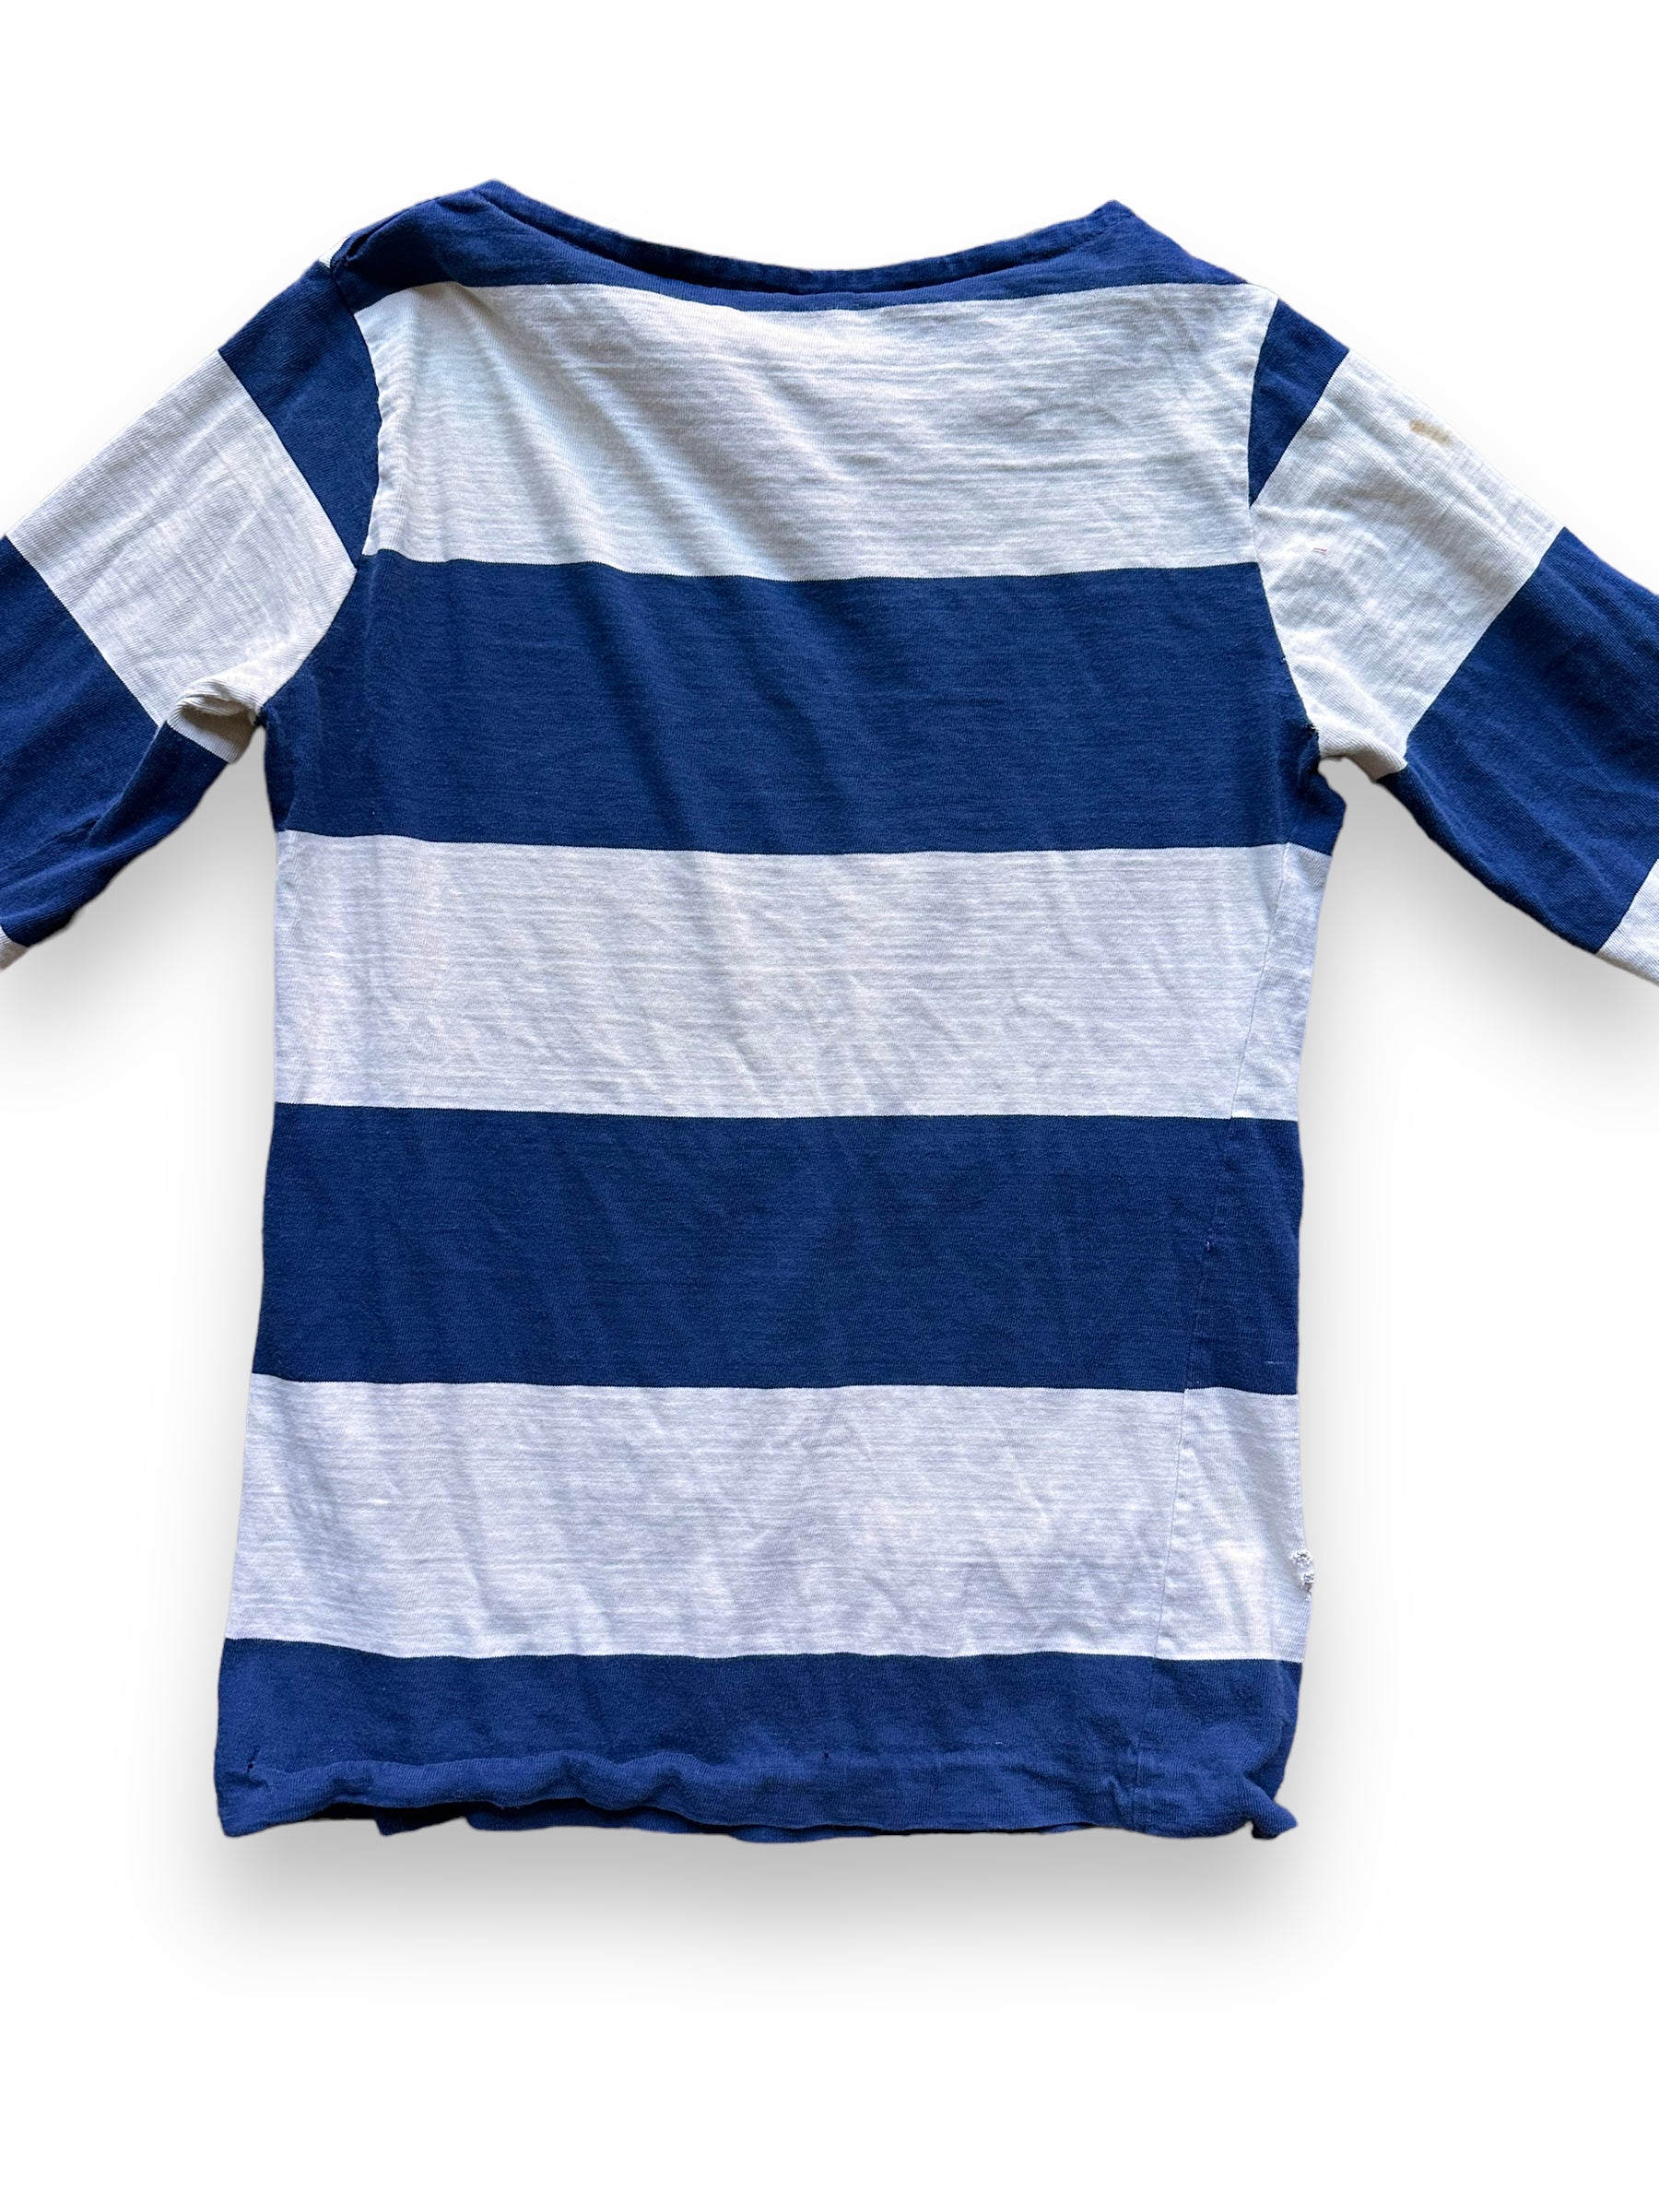 Rear Detail on Vintage Blue Striped Surfer Shirt SZ M | Vintage Striped Shirt Seattle | Barn Owl Vintage Seattle